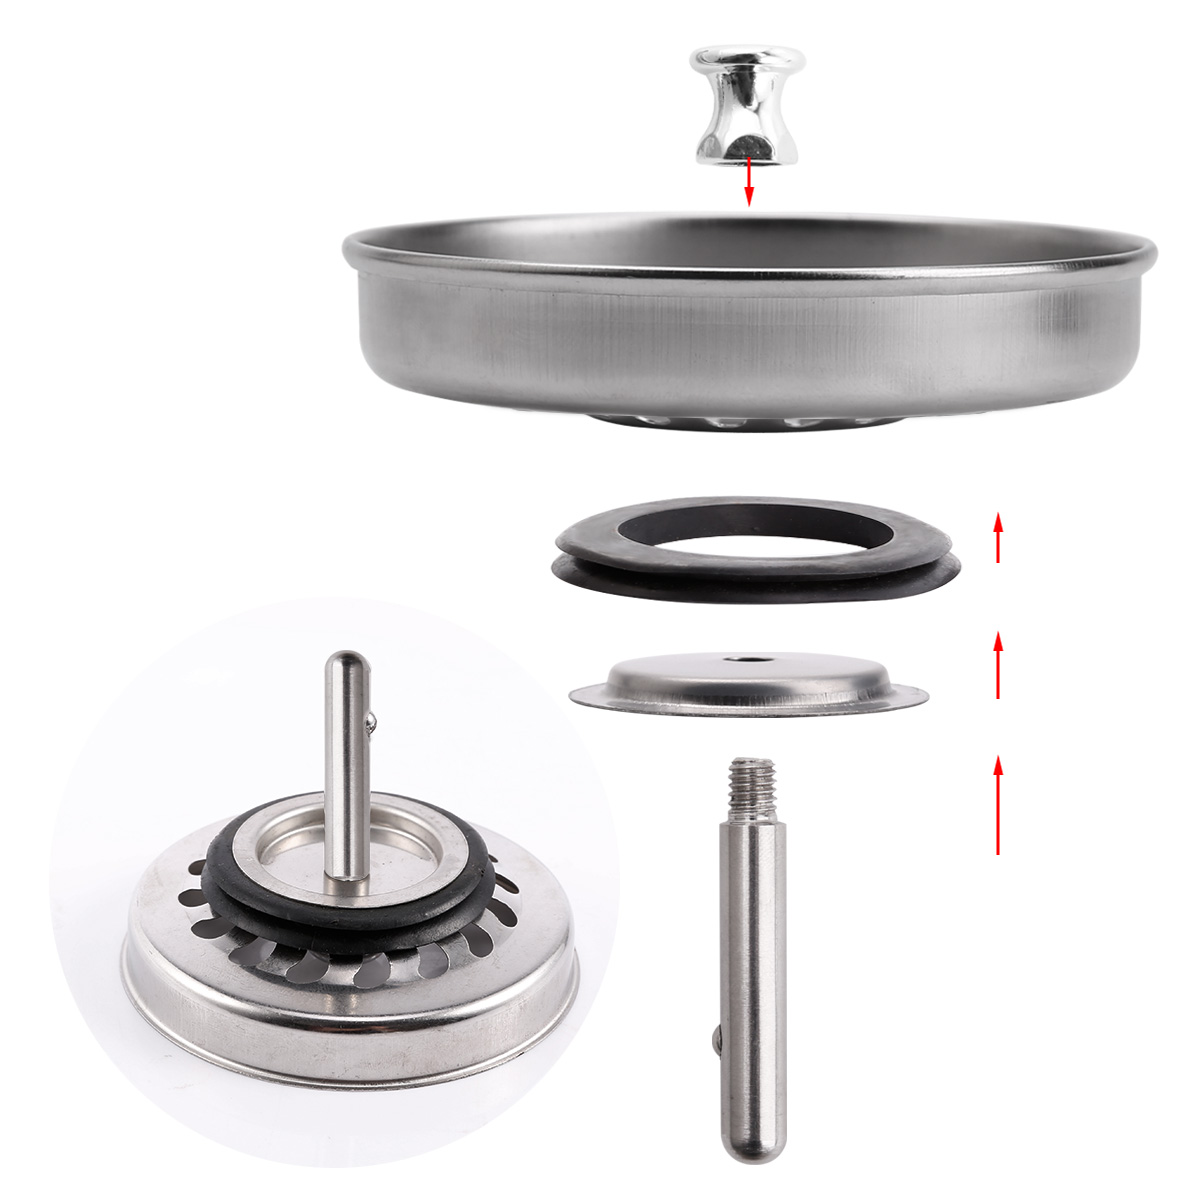 Details About Kitchen Sink Basket Strainer Waste Stainless Steel Plug Fitting 80mm